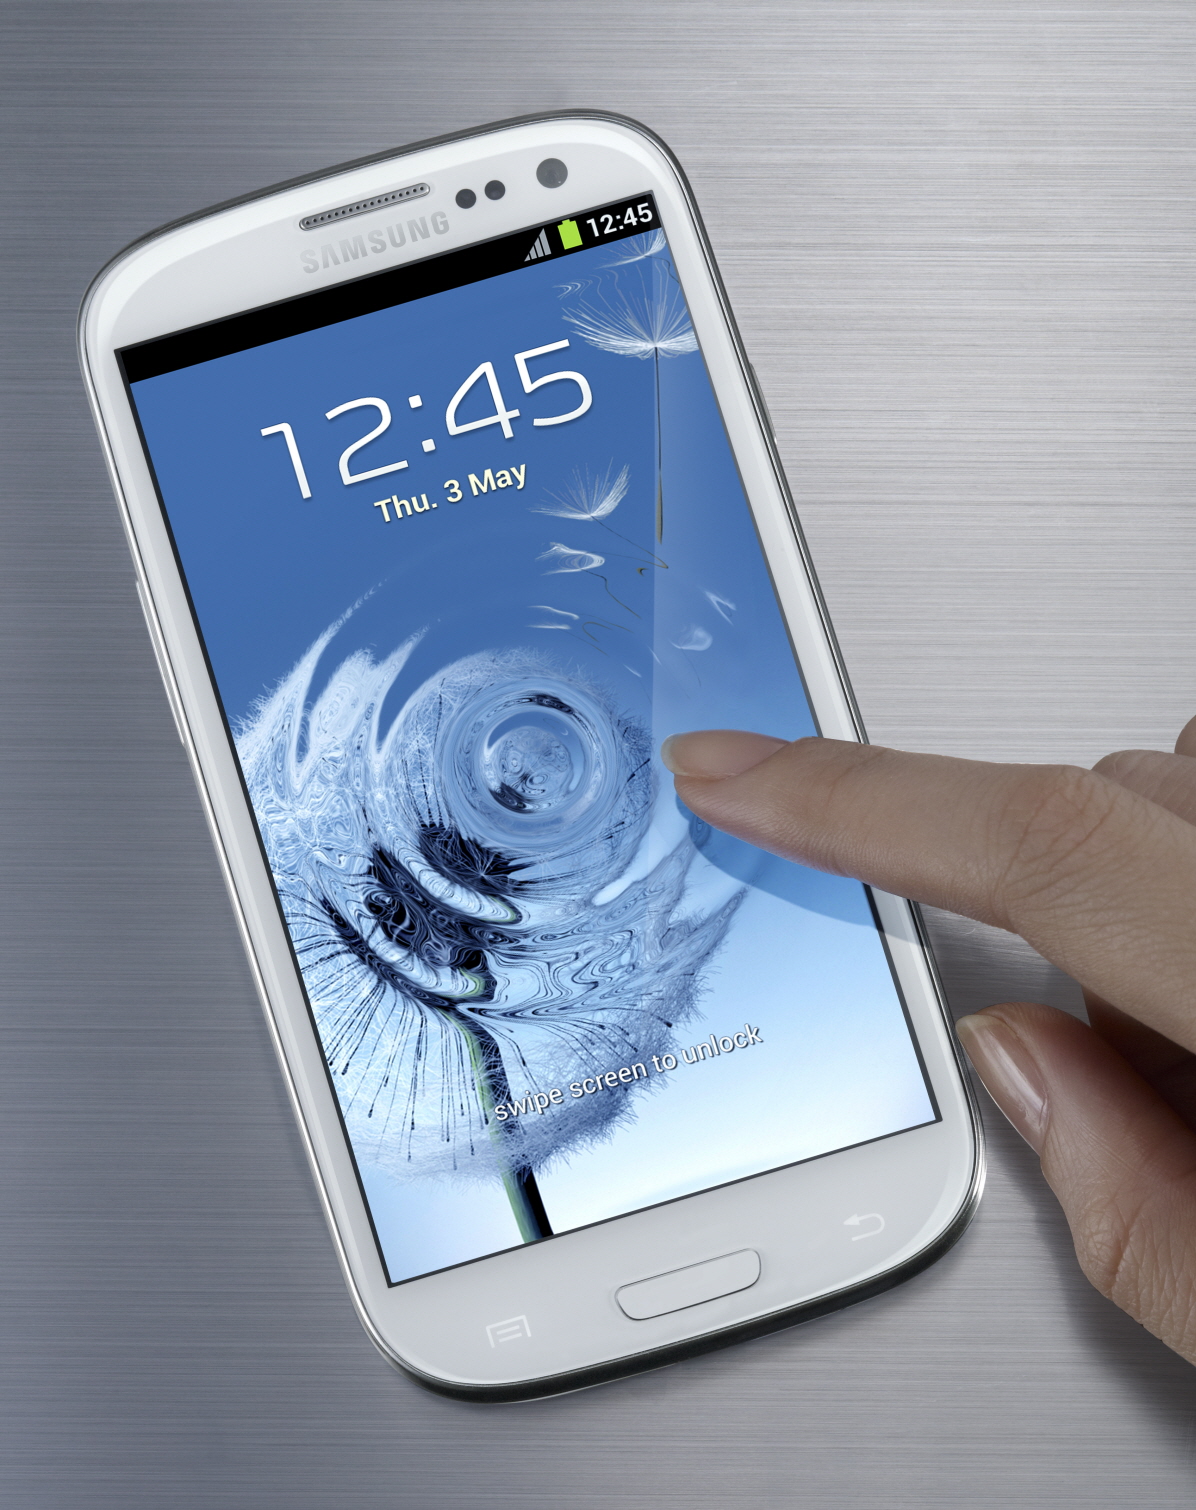 Samsung Galaxy S III back cover